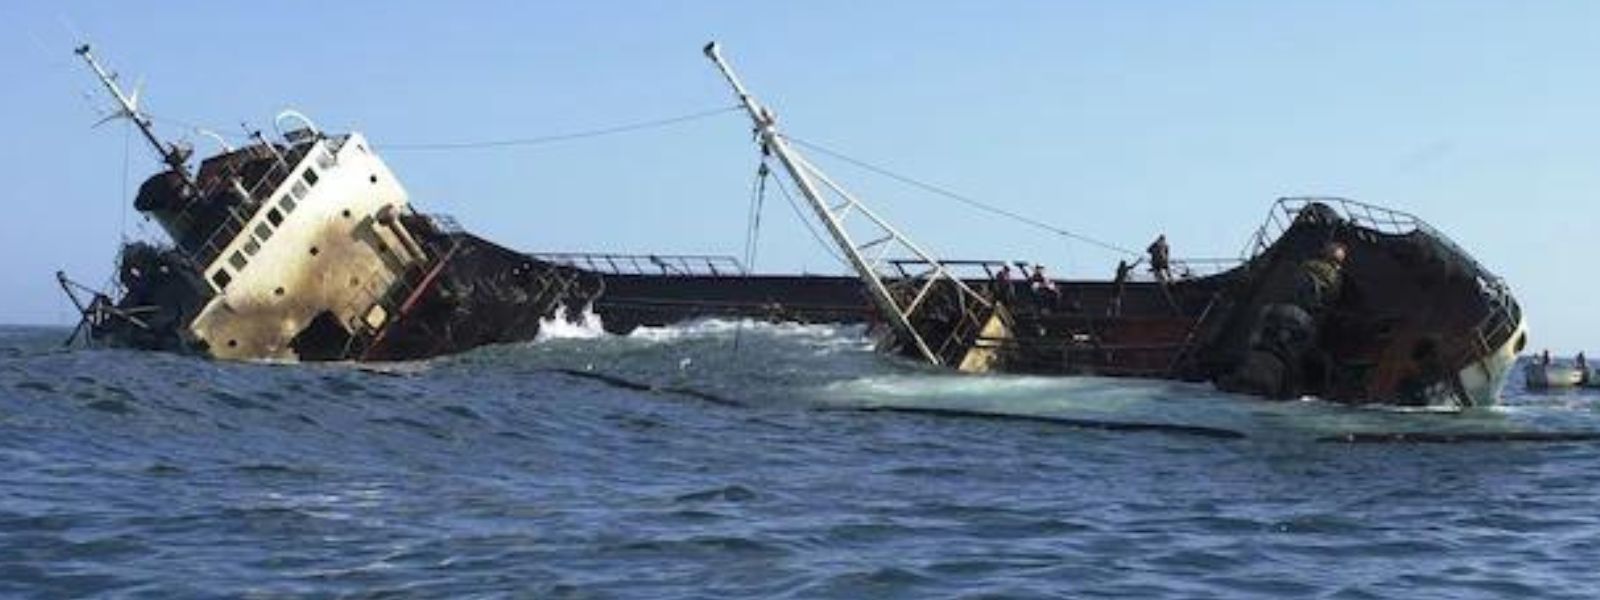 Iran Rescues 21 Sri Lankan Crew From Sinking Ship